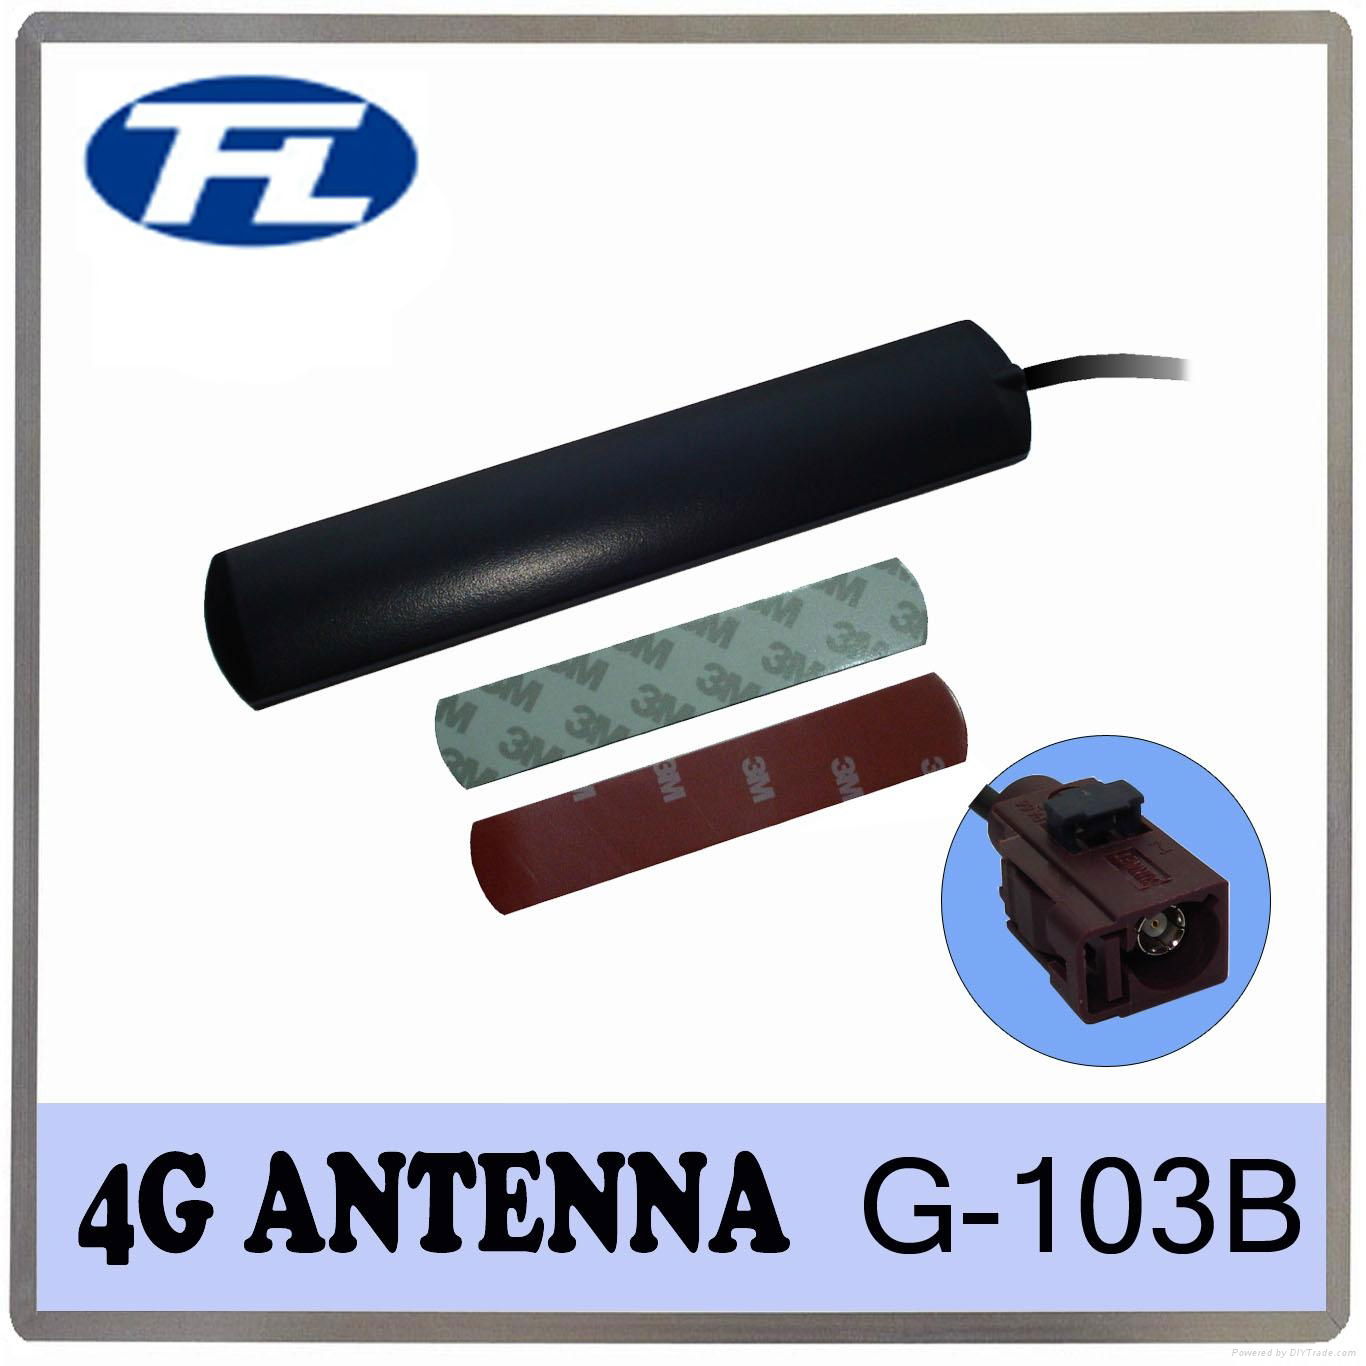 Adhesive Mount 4G/LTE Antenna